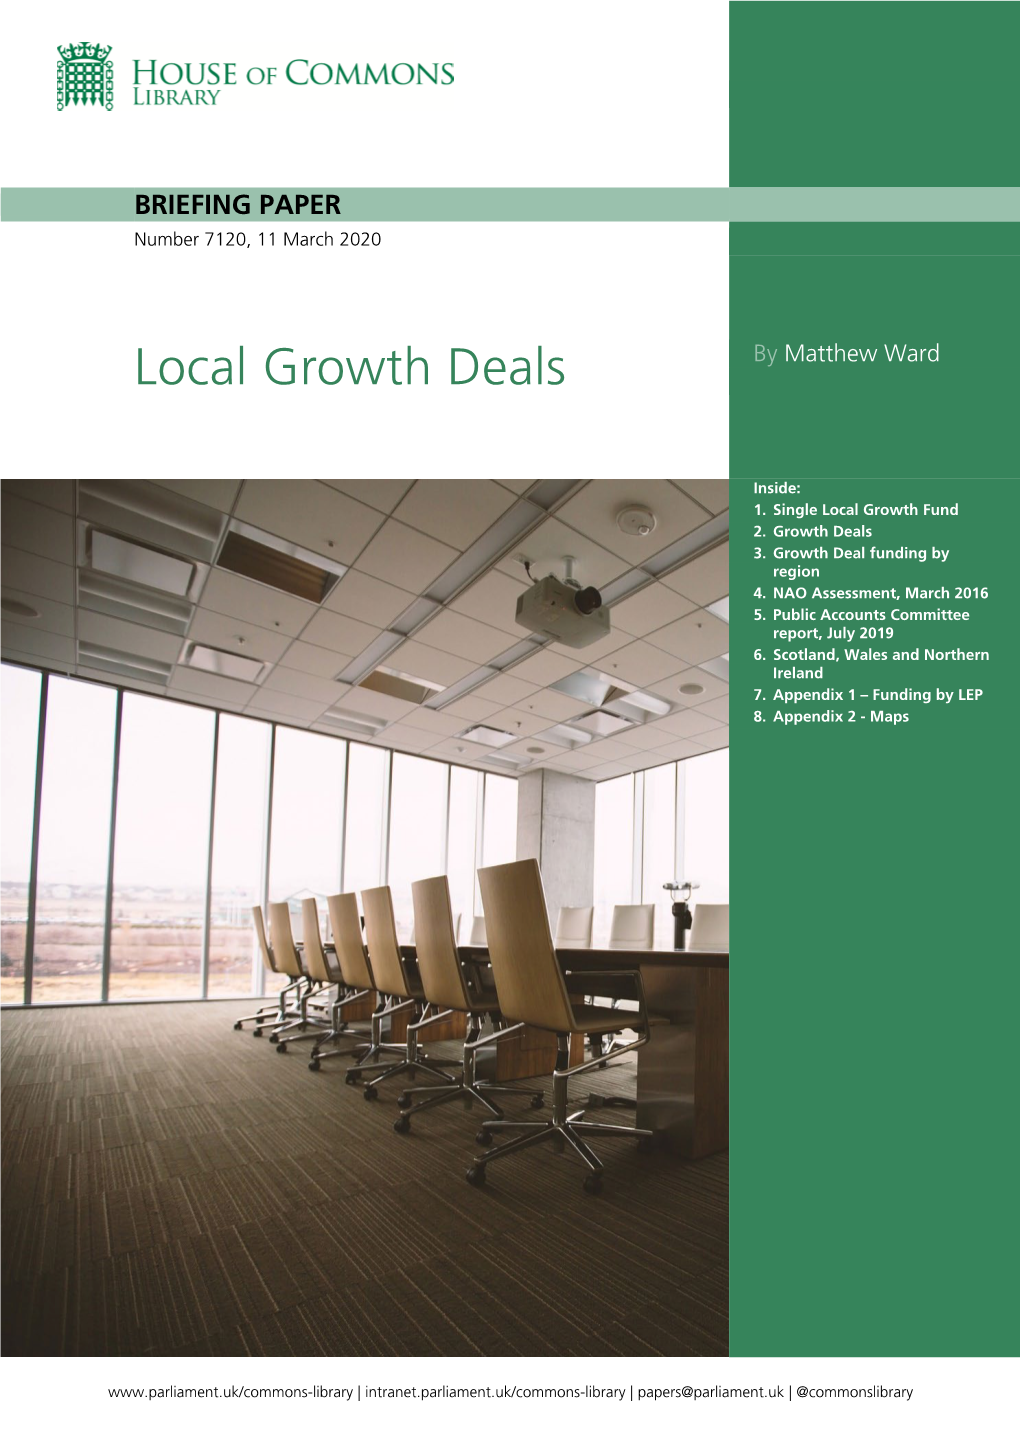 Local Growth Deals by Matthew Ward